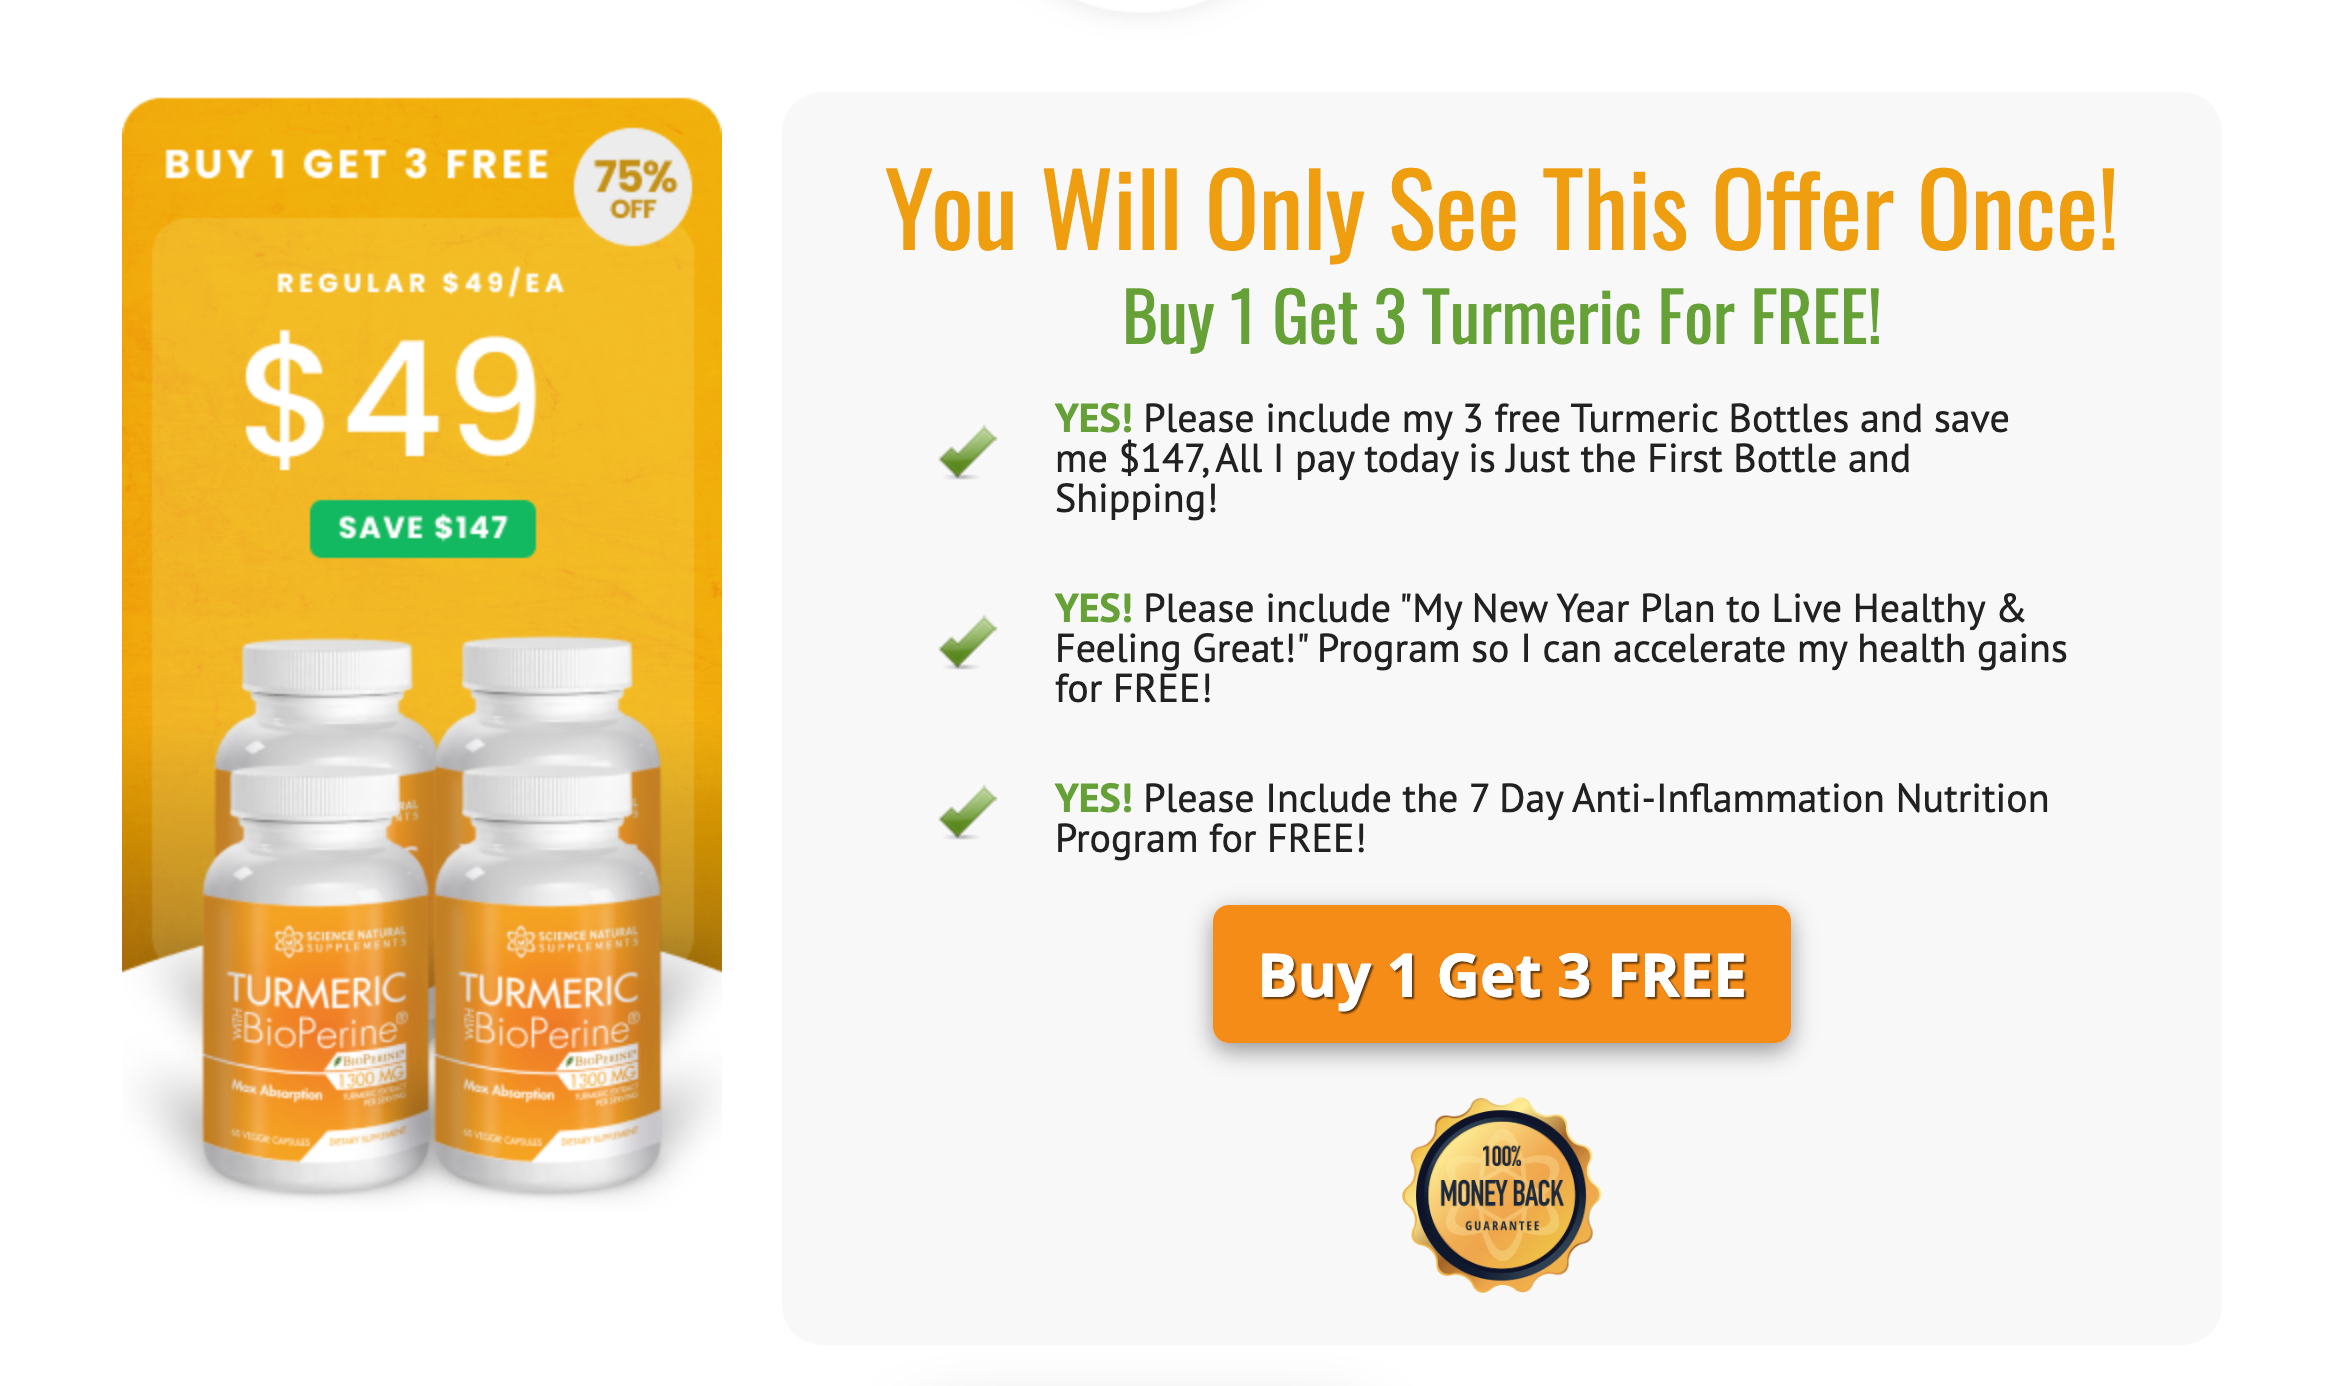 Turmeric BioPerine - Buy 1 Get 3 Turmeric For FREE